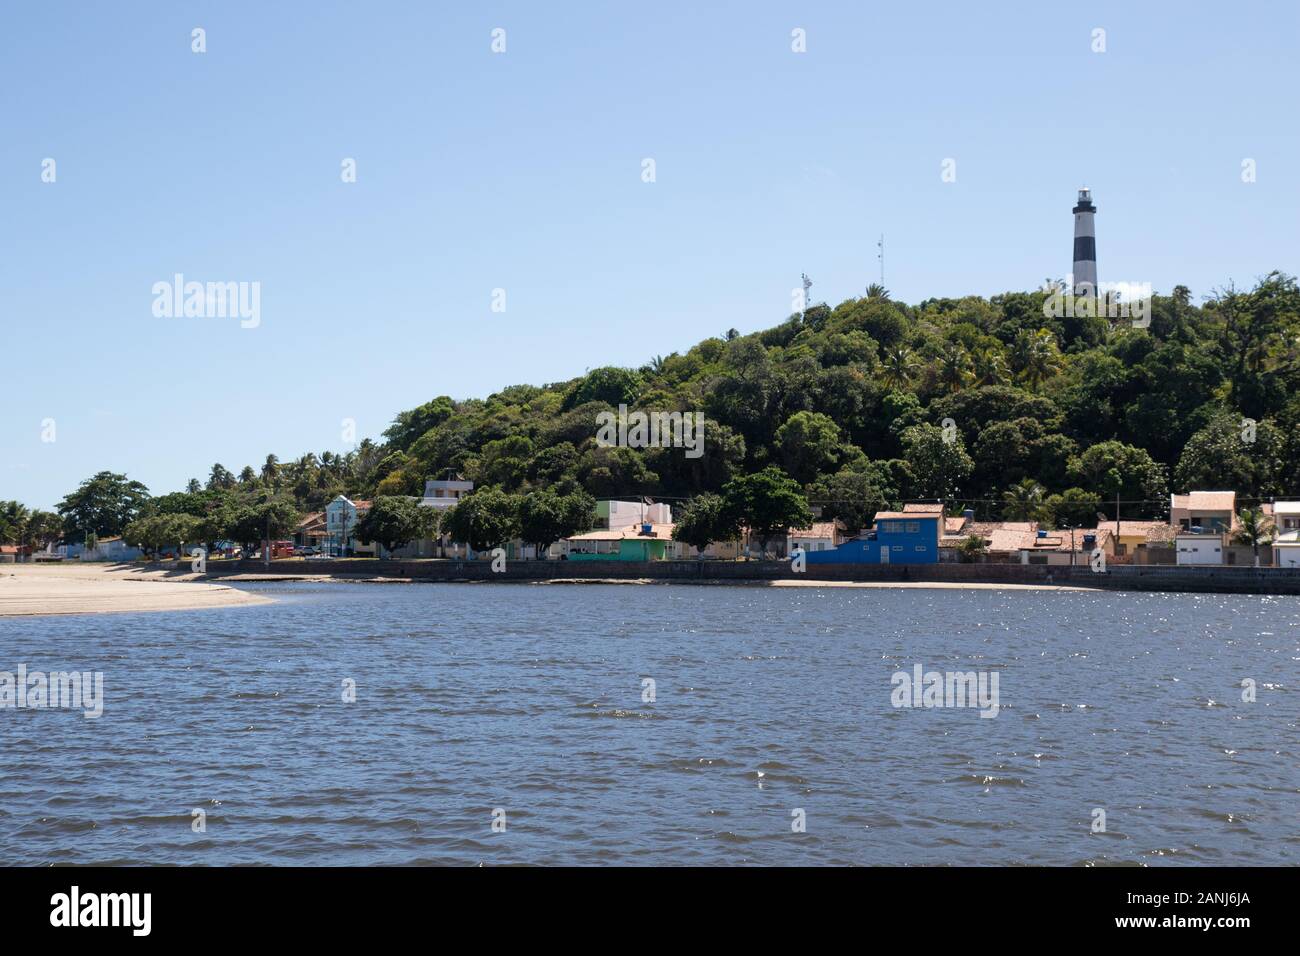 Port of Loss / Alagoas / Brazil. November, 29, 2019. View of Porto de Pedras city and Patacho beach in early summer. Stock Photo